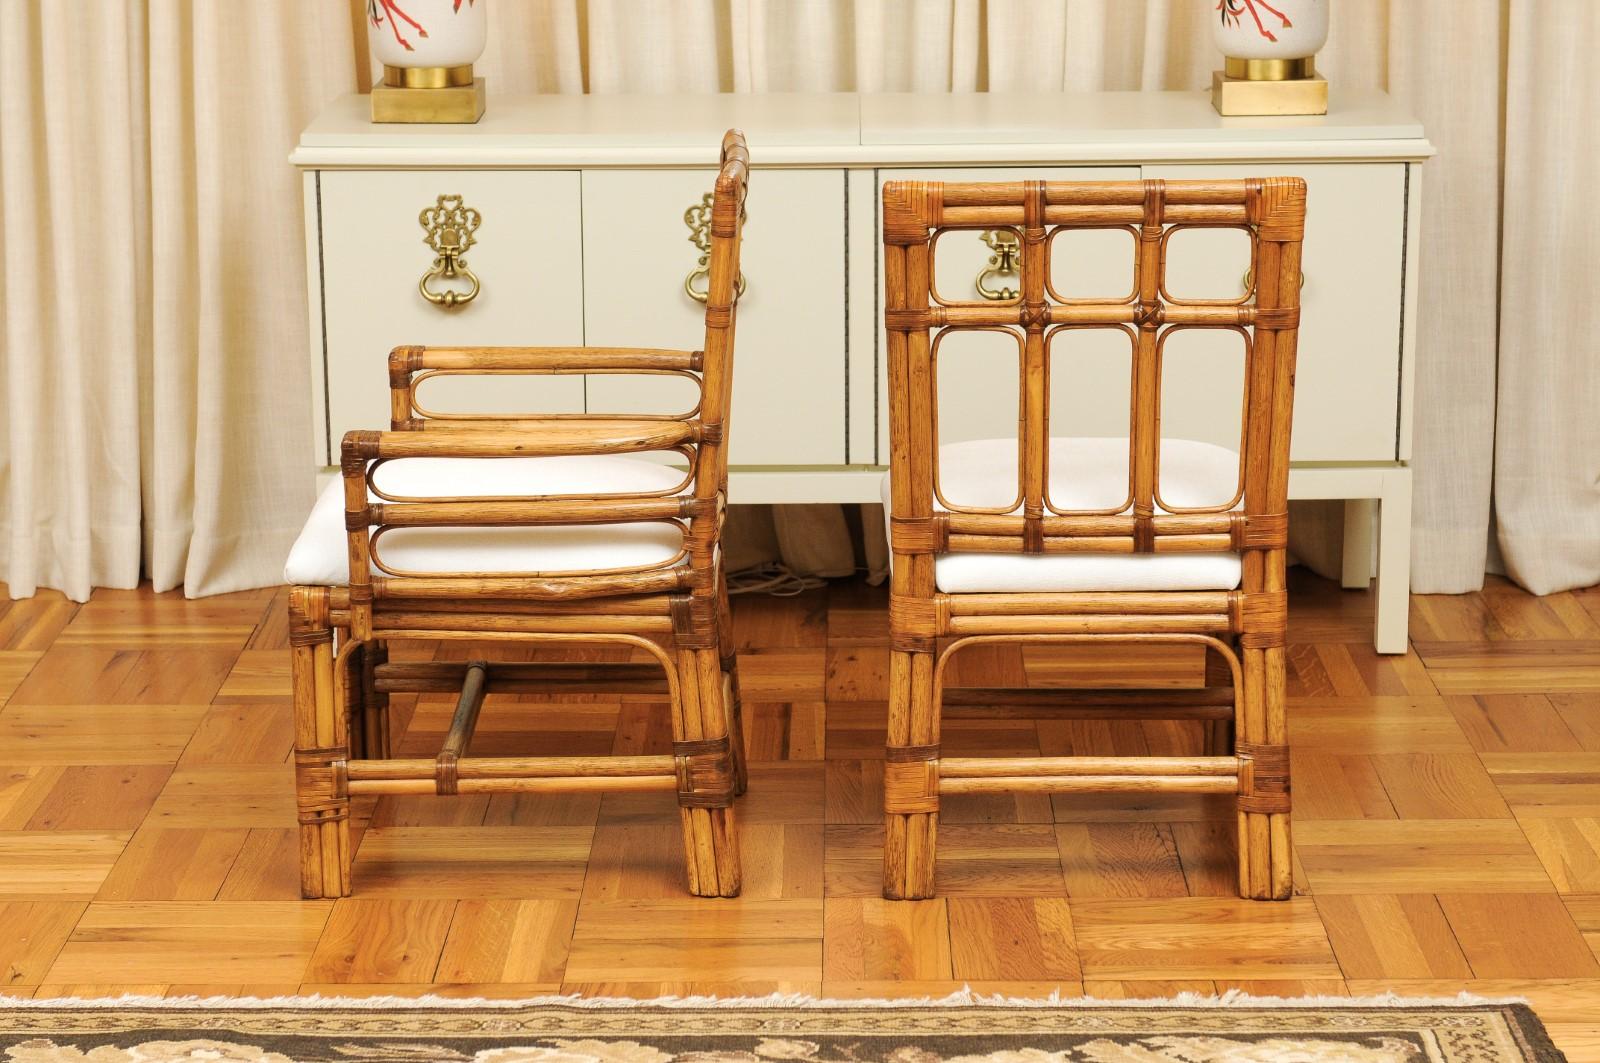 Majestic Set of 12 Greene & Greene Inspired Chairs by Brown Jordan, circa 1980 For Sale 1